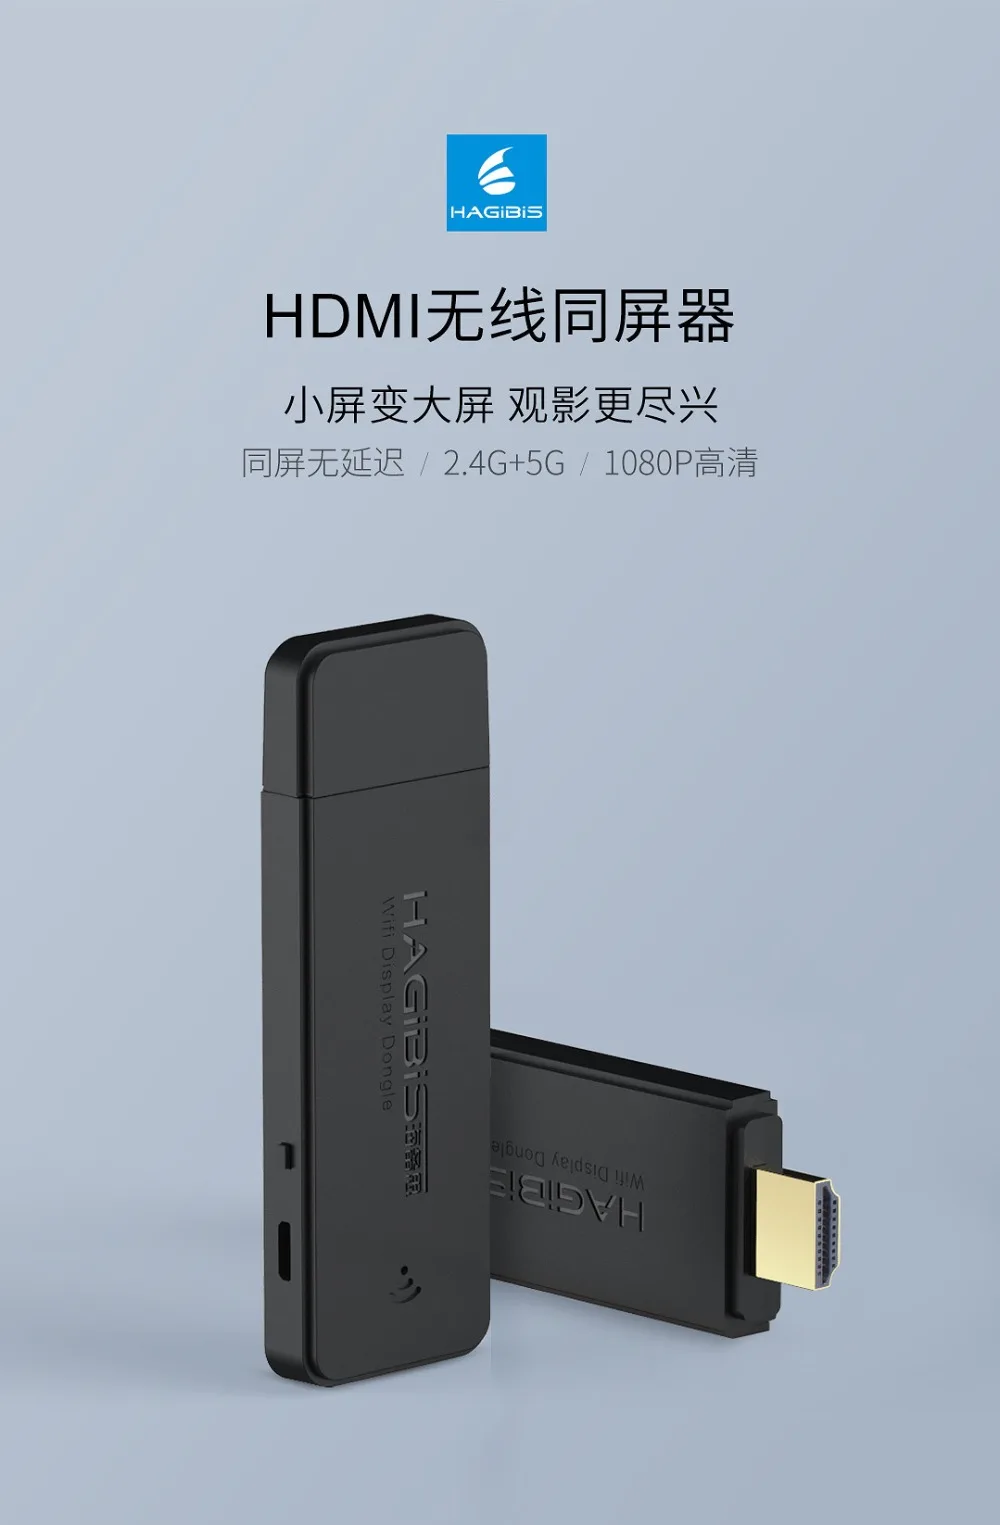 Xiaomi hagios HDMI Беспроводной такой же экран мини HD 1080P такая же частота 2,4G+ 5G wifi домашний кинотеатр для IOS/Android/MAC OS/Windows